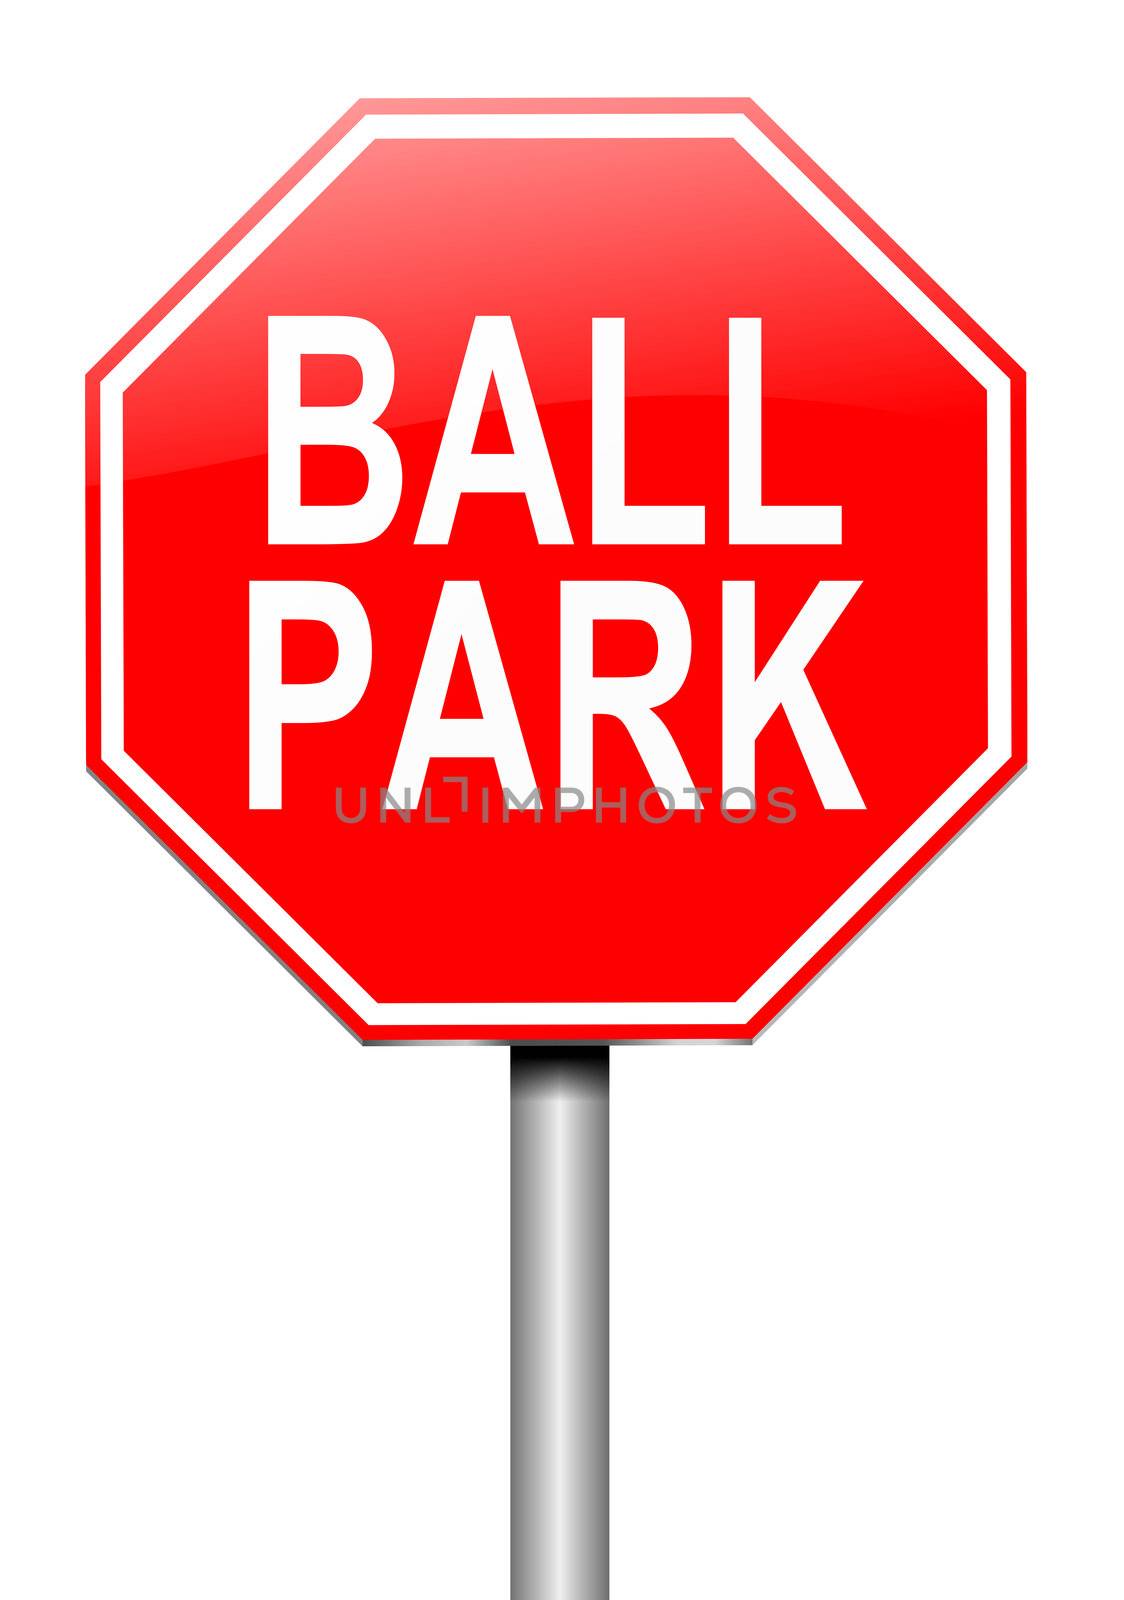 Ball park concept. by 72soul